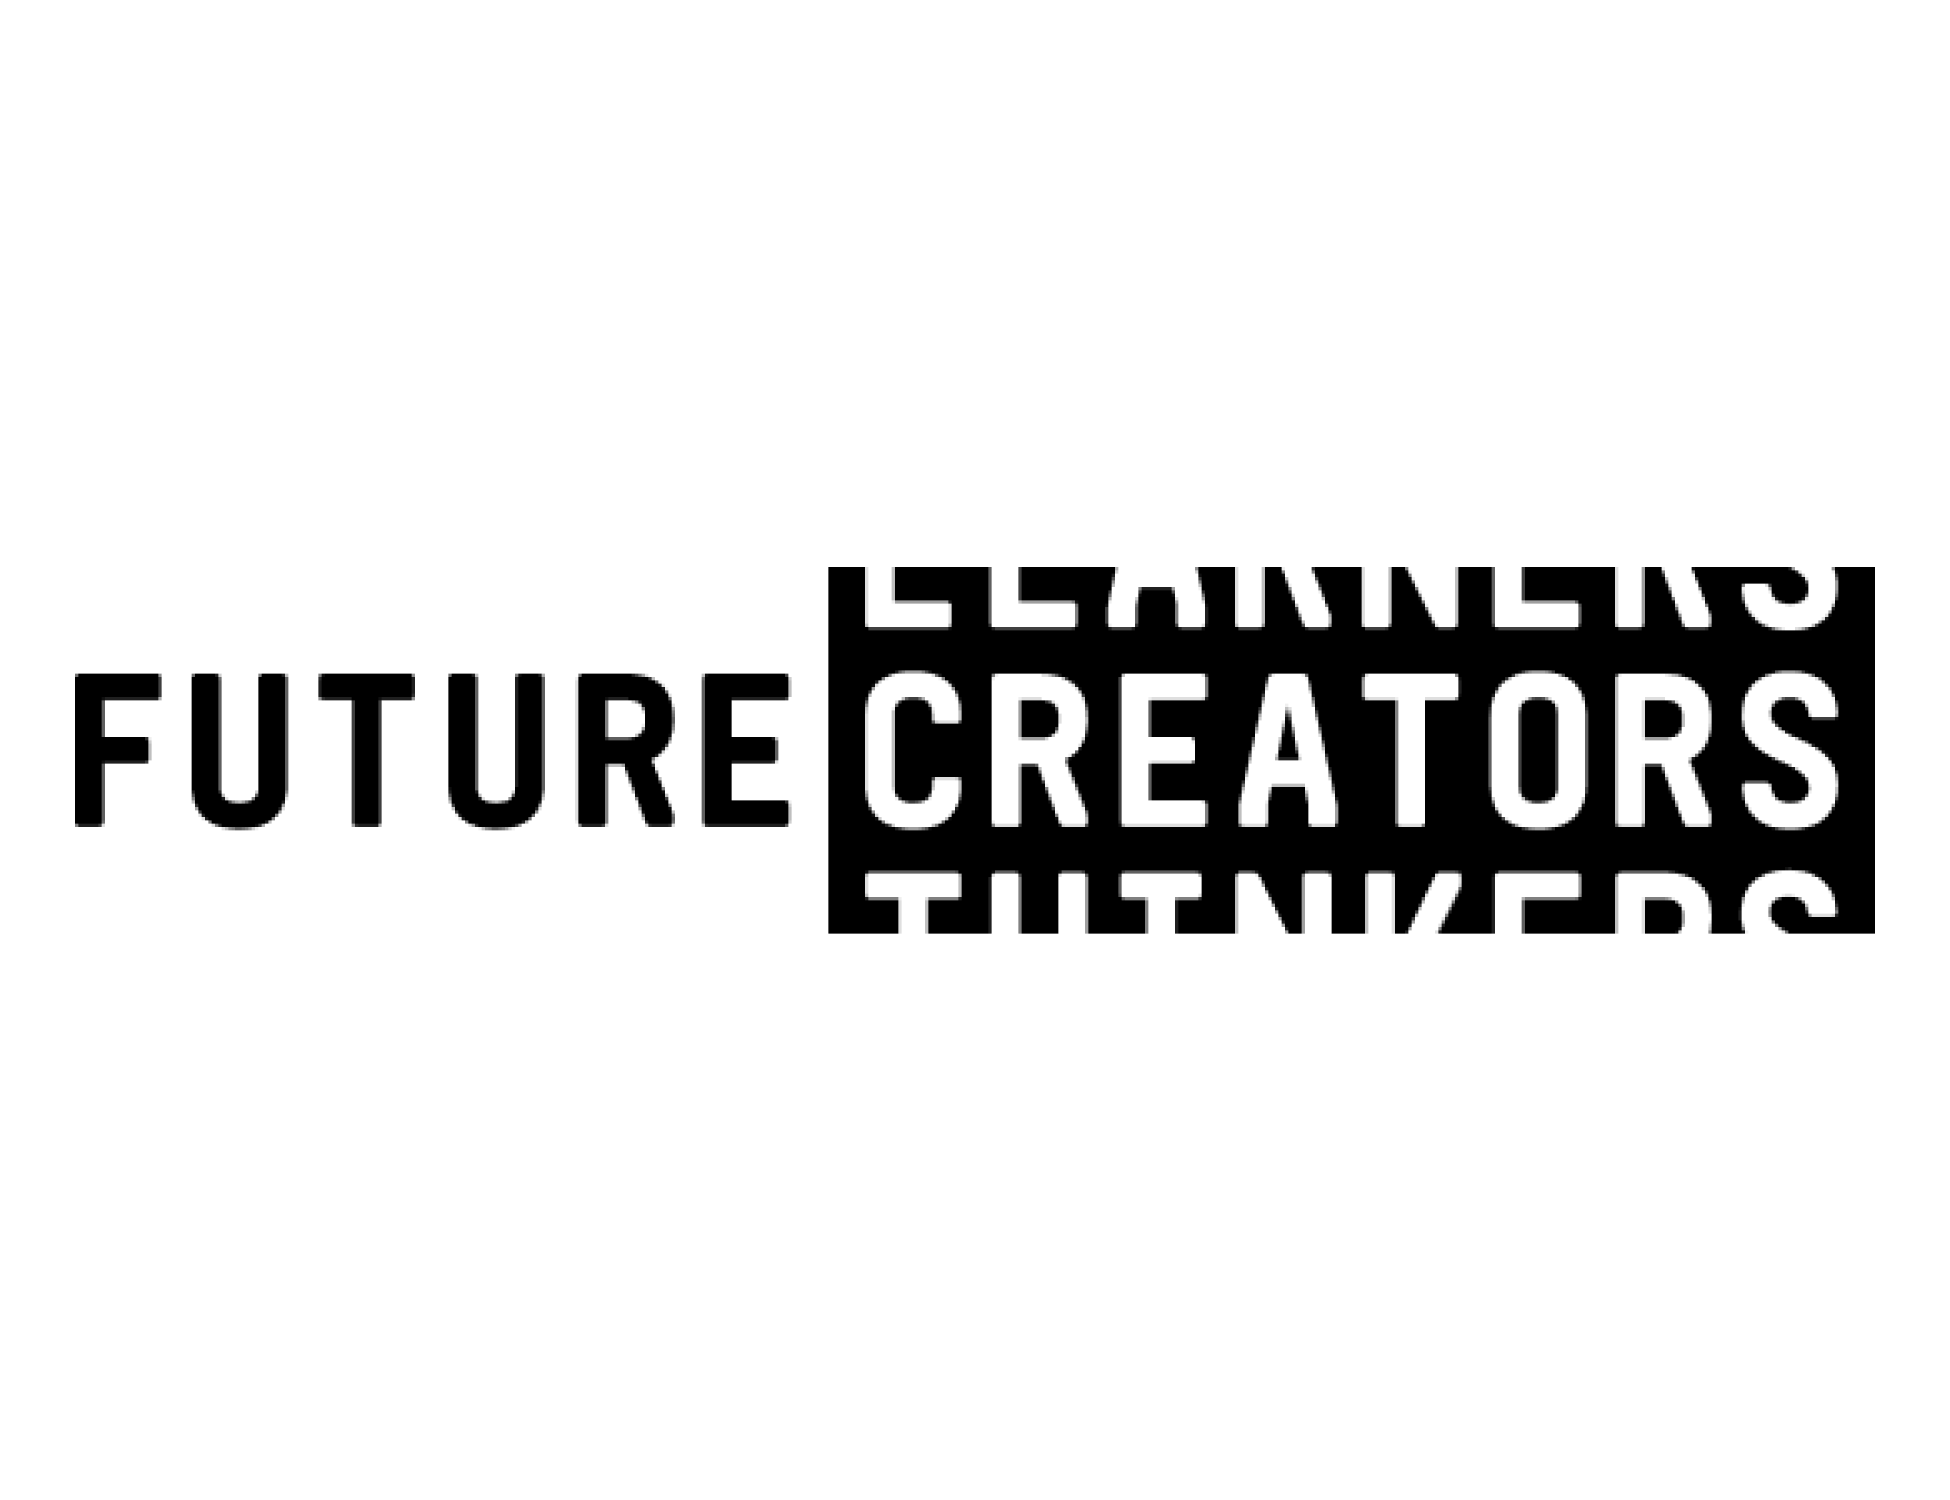 Future Creators logo